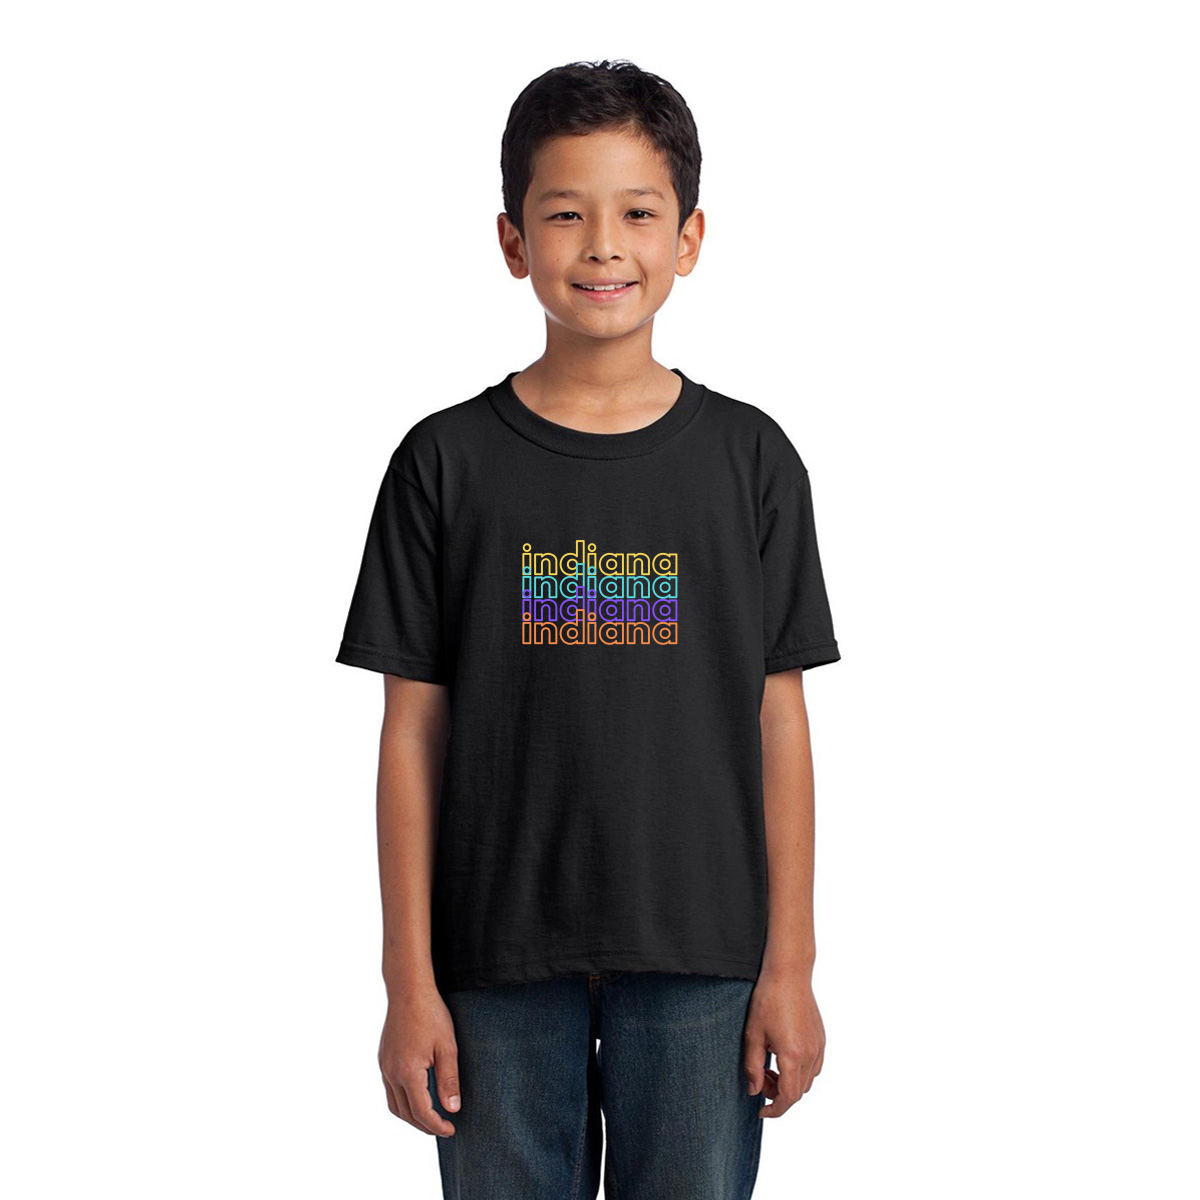 Indiana Kids T-shirt | Black